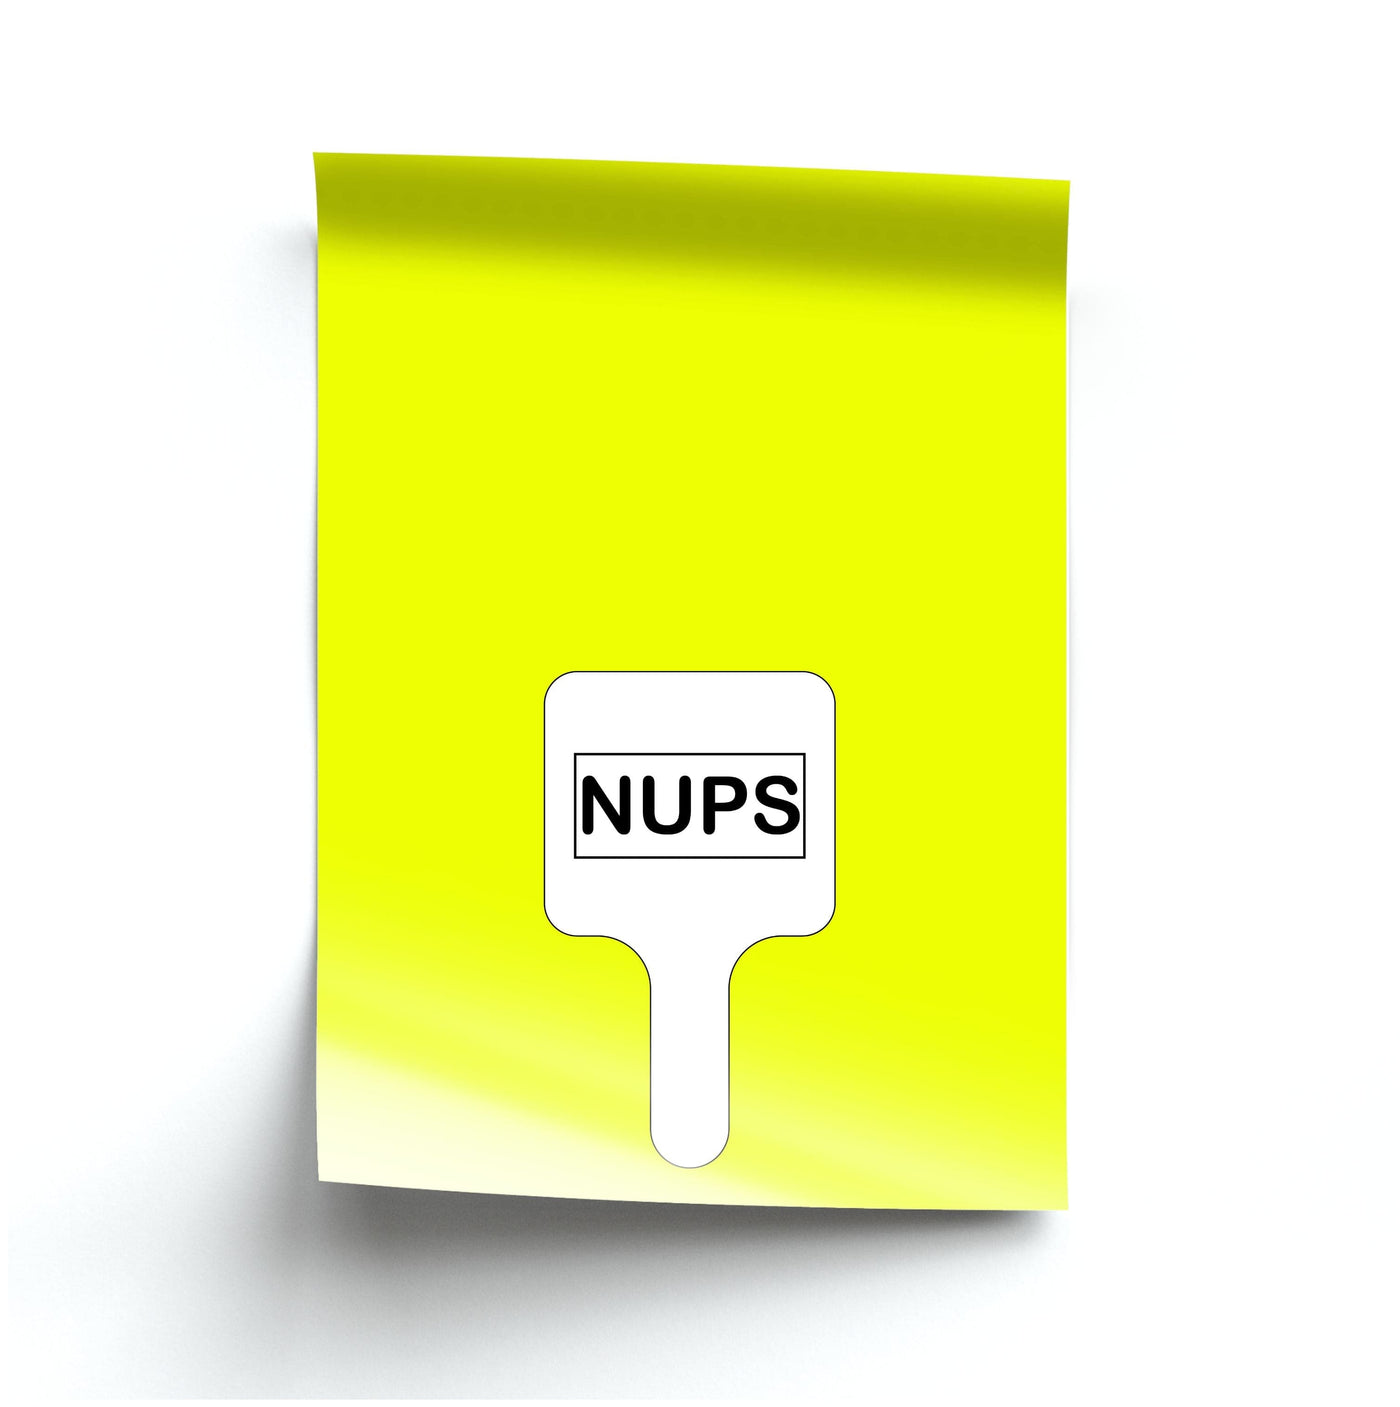 Nups - Brooklyn Nine-Nine Poster